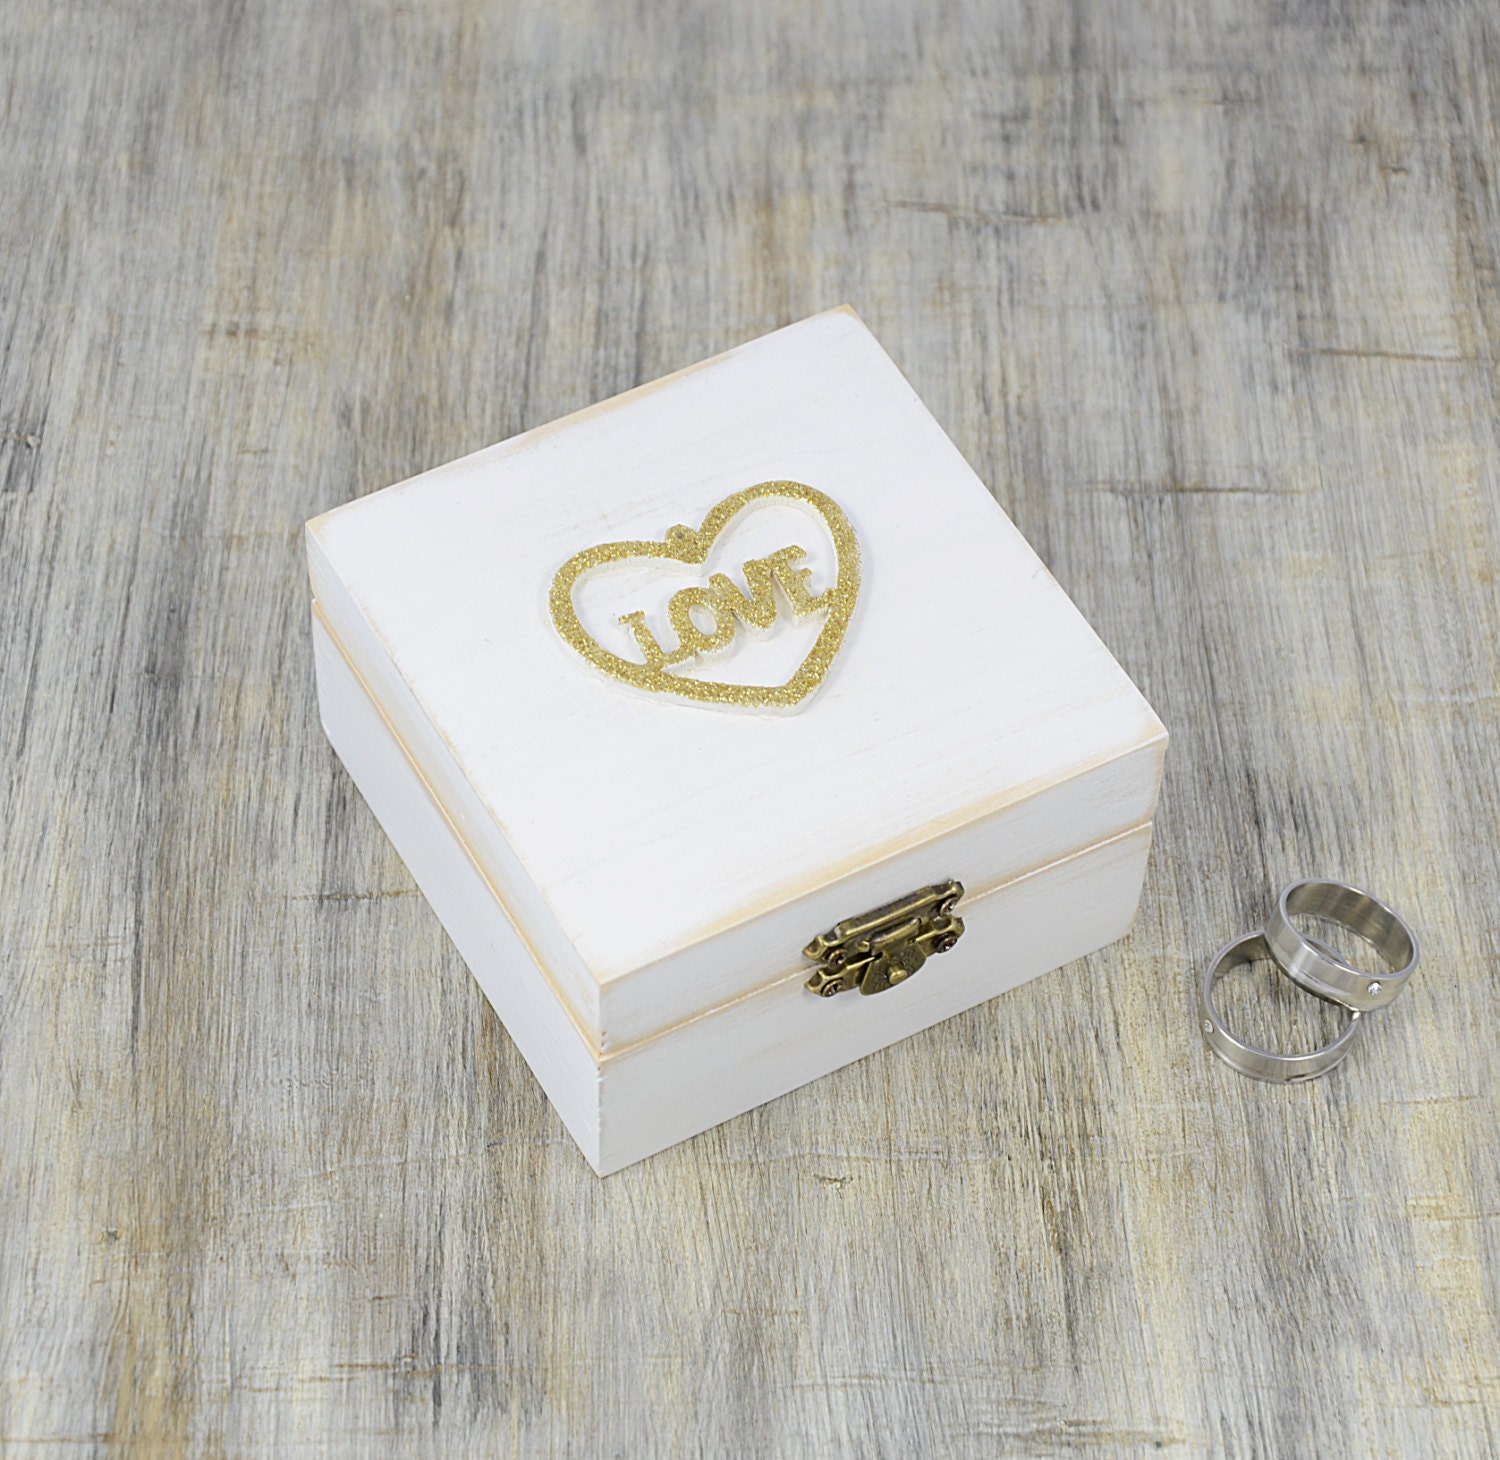 White Gold Ring Bearer Box , Love Wedding Box, Pillow Alternative, Distressed Wooden Jewelry Box, sparkly gold heart, ring bearer pillow - NataliaDecor